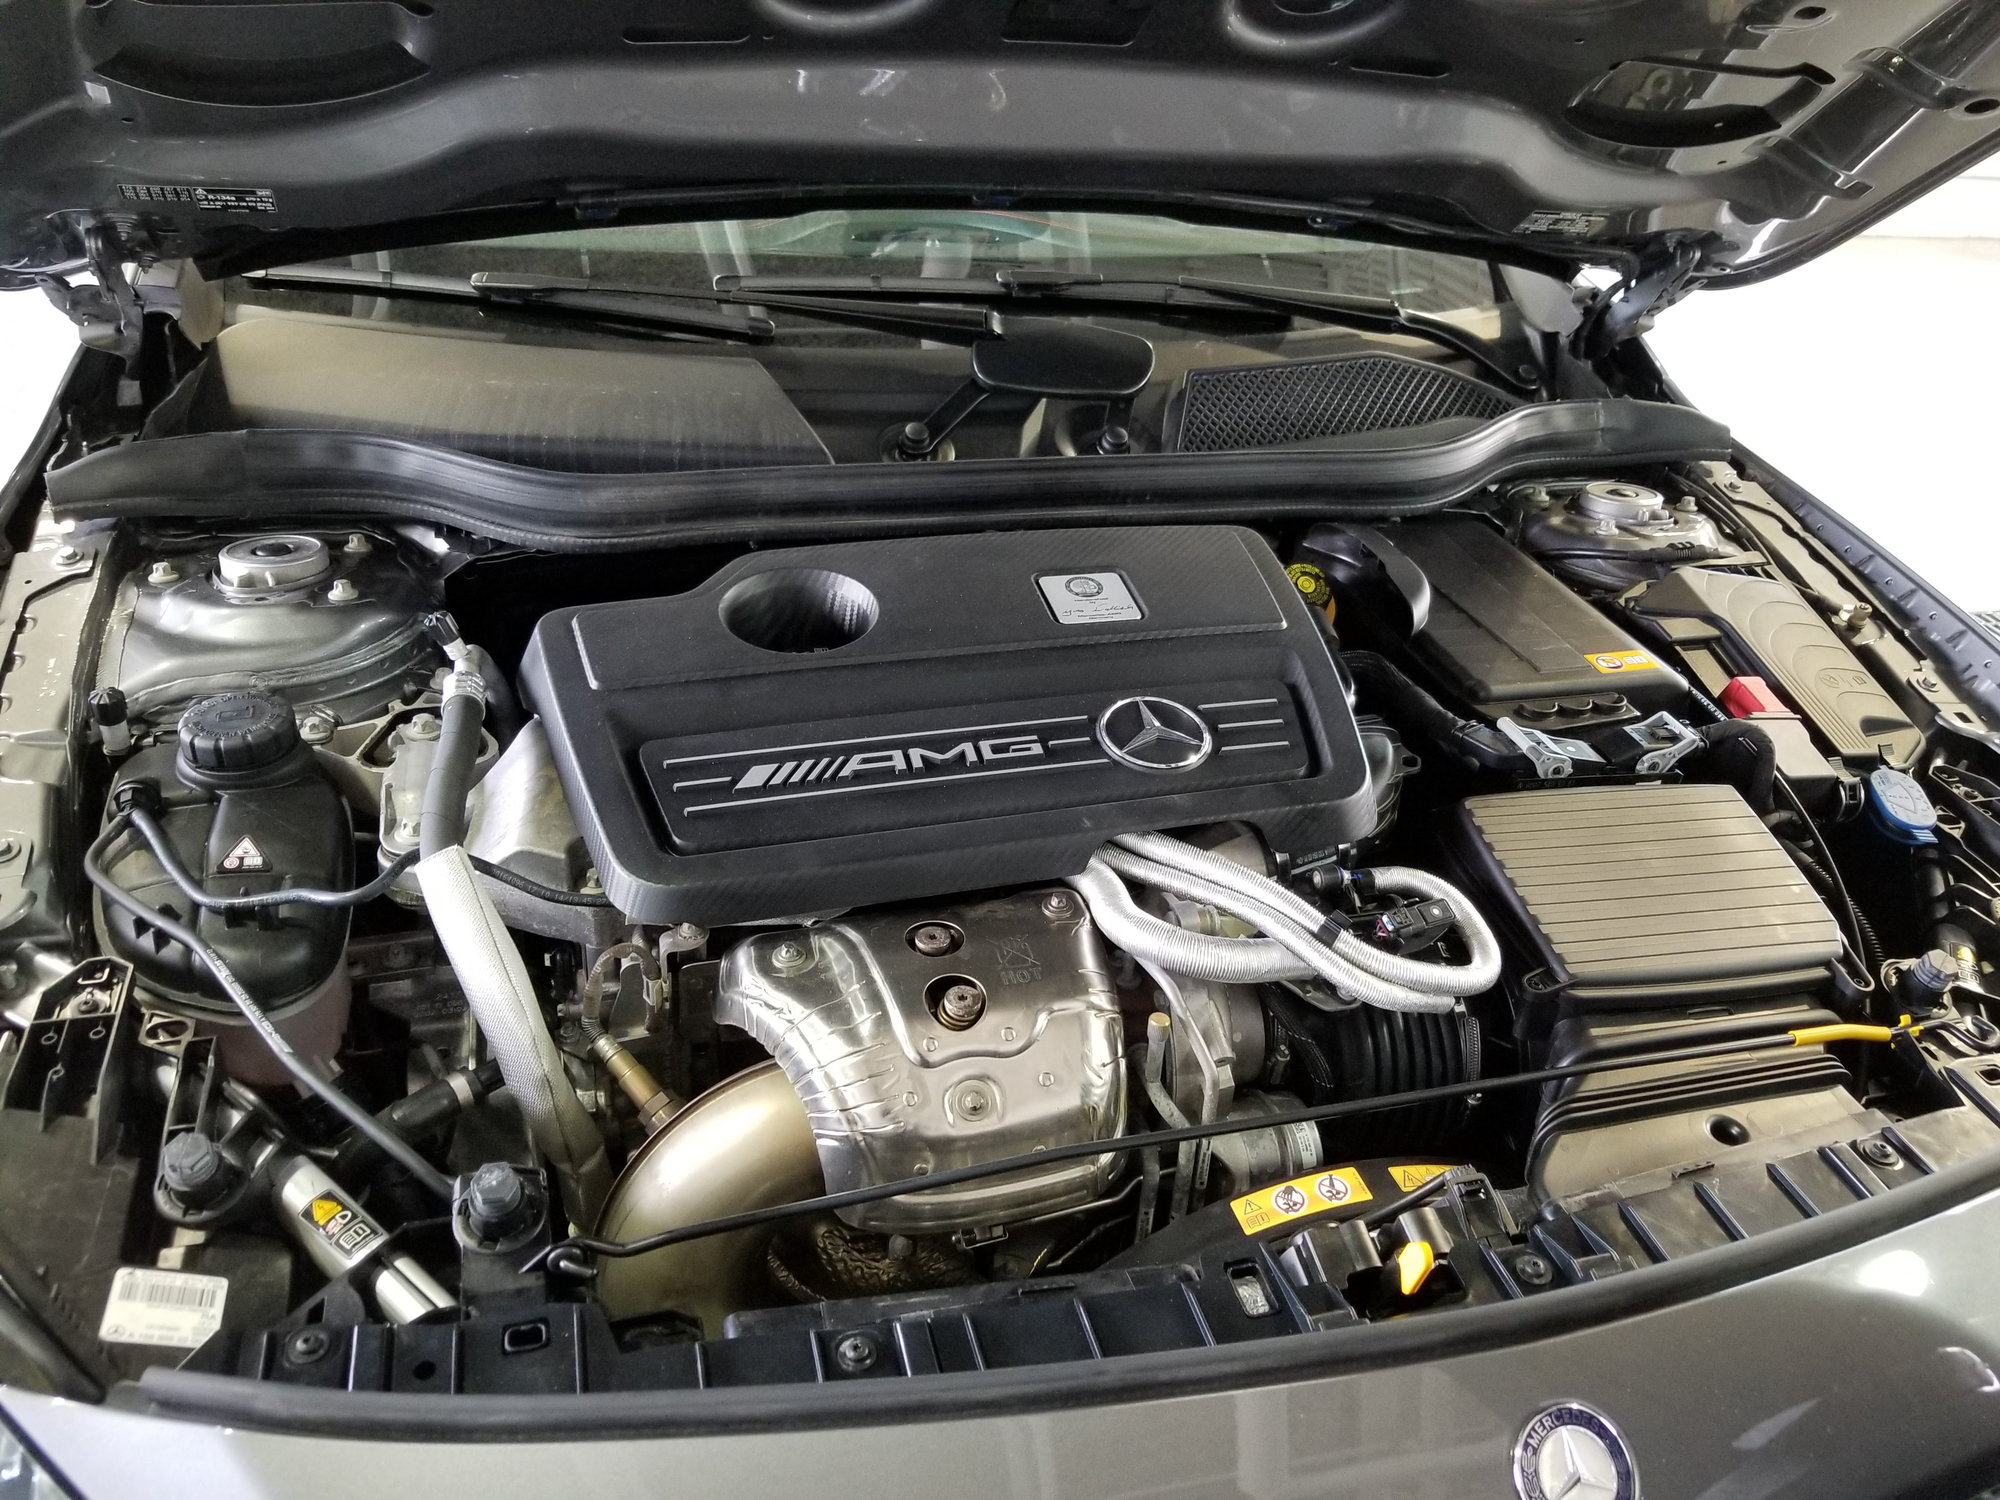 2015 Mercedes-Benz GLA45 AMG - 2015 GLA45 CPO Warranty/ Xpel Front Wrap - Used - VIN WDDTG5CBXFJ111358 - 4 cyl - AWD - Automatic - Hatchback - Gray - Calgary, AB T2T0K6, Canada